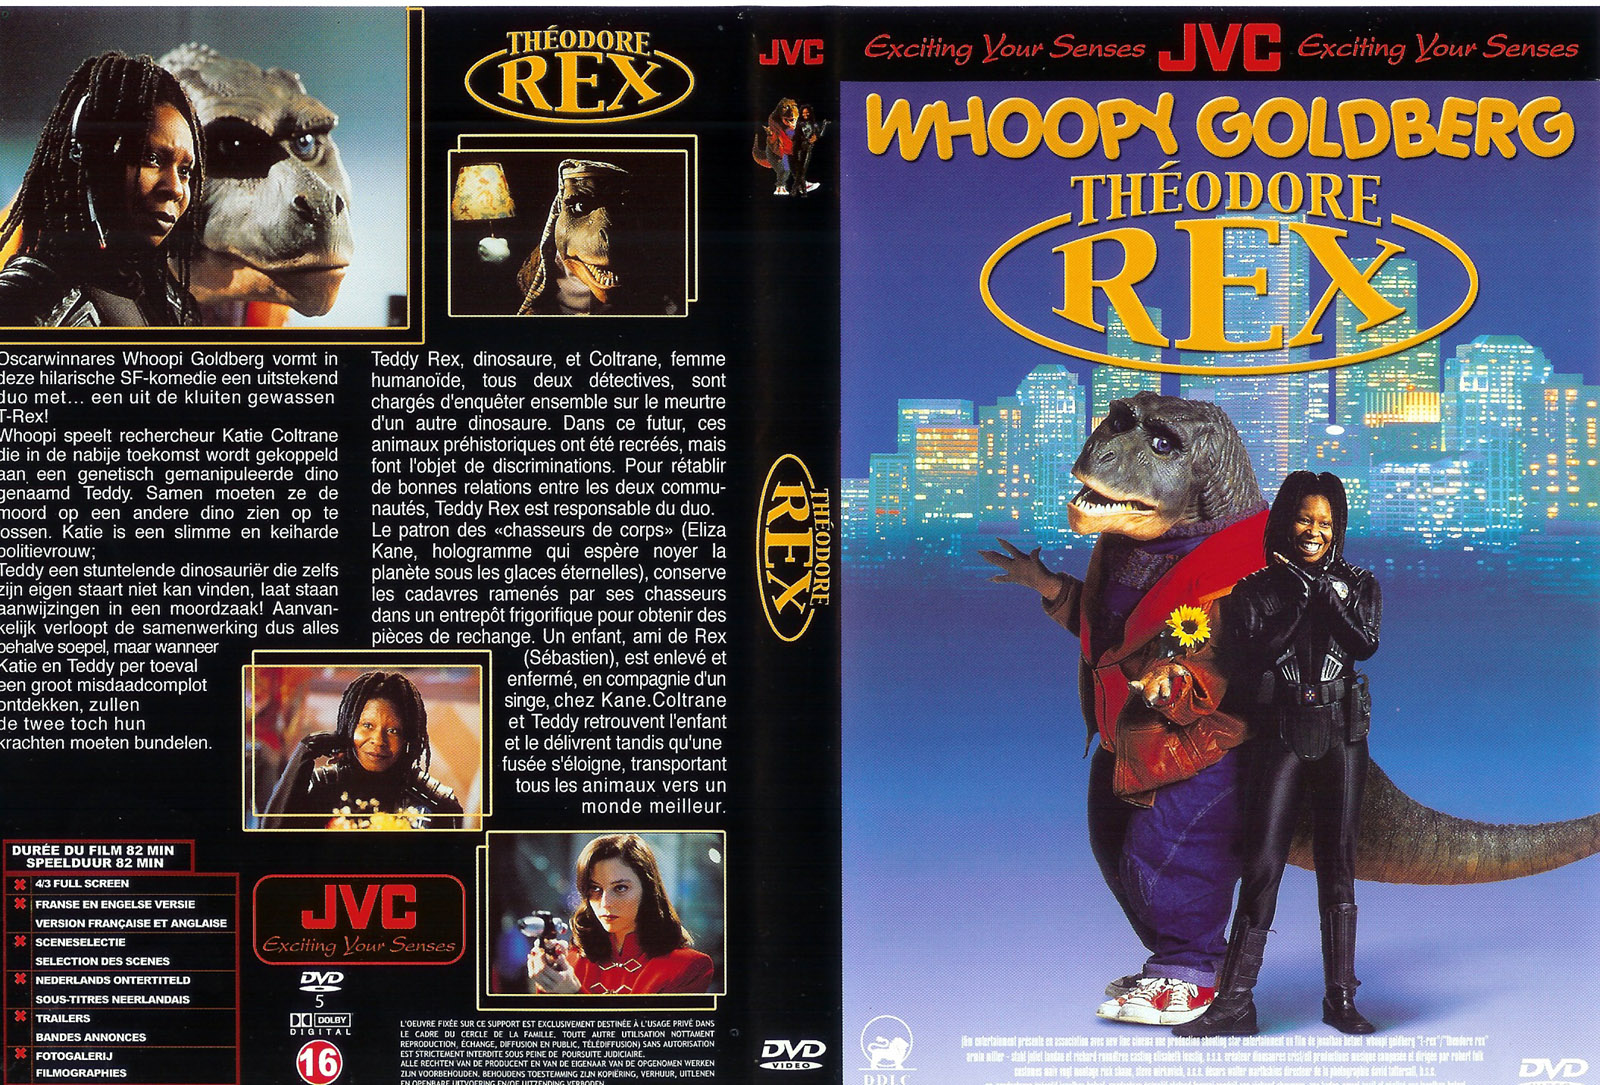 Jaquette DVD Thodore Rex v2